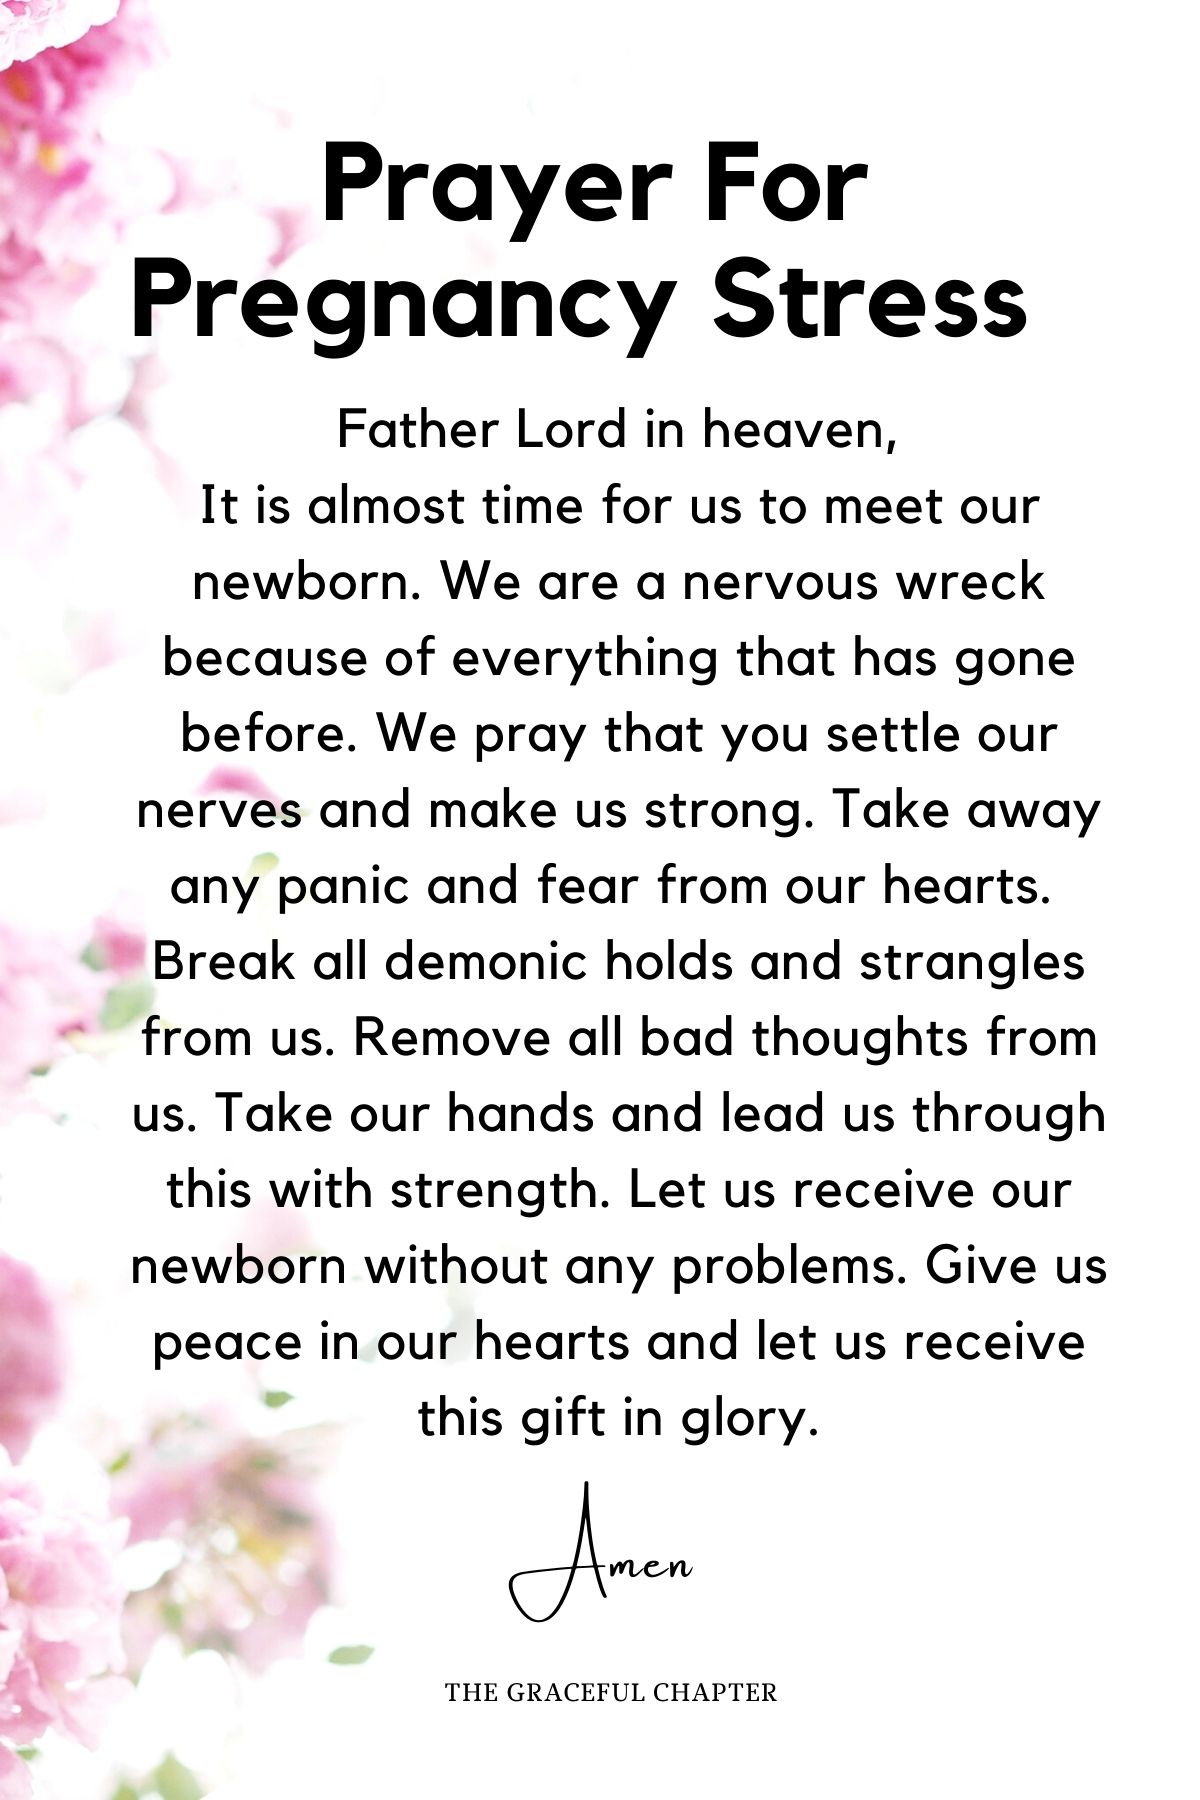 Prayer for pregnancy stress 